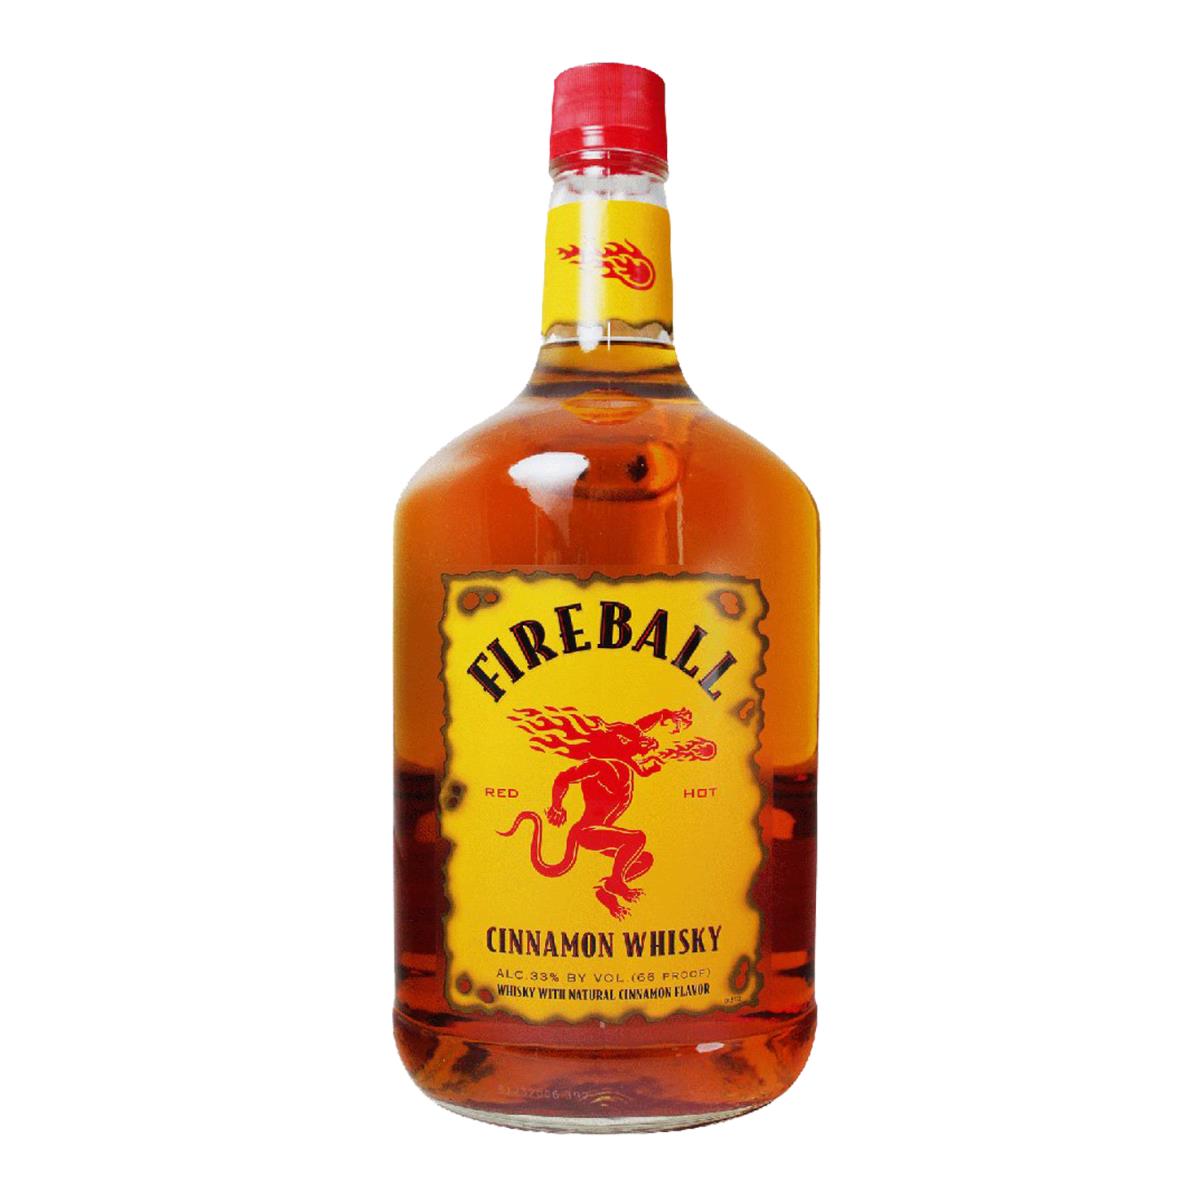 Fireball cinnamon whisky. Fireball Cinnamon Whiskey. Файер Болл виски. Алкогольный напиток Fireball.